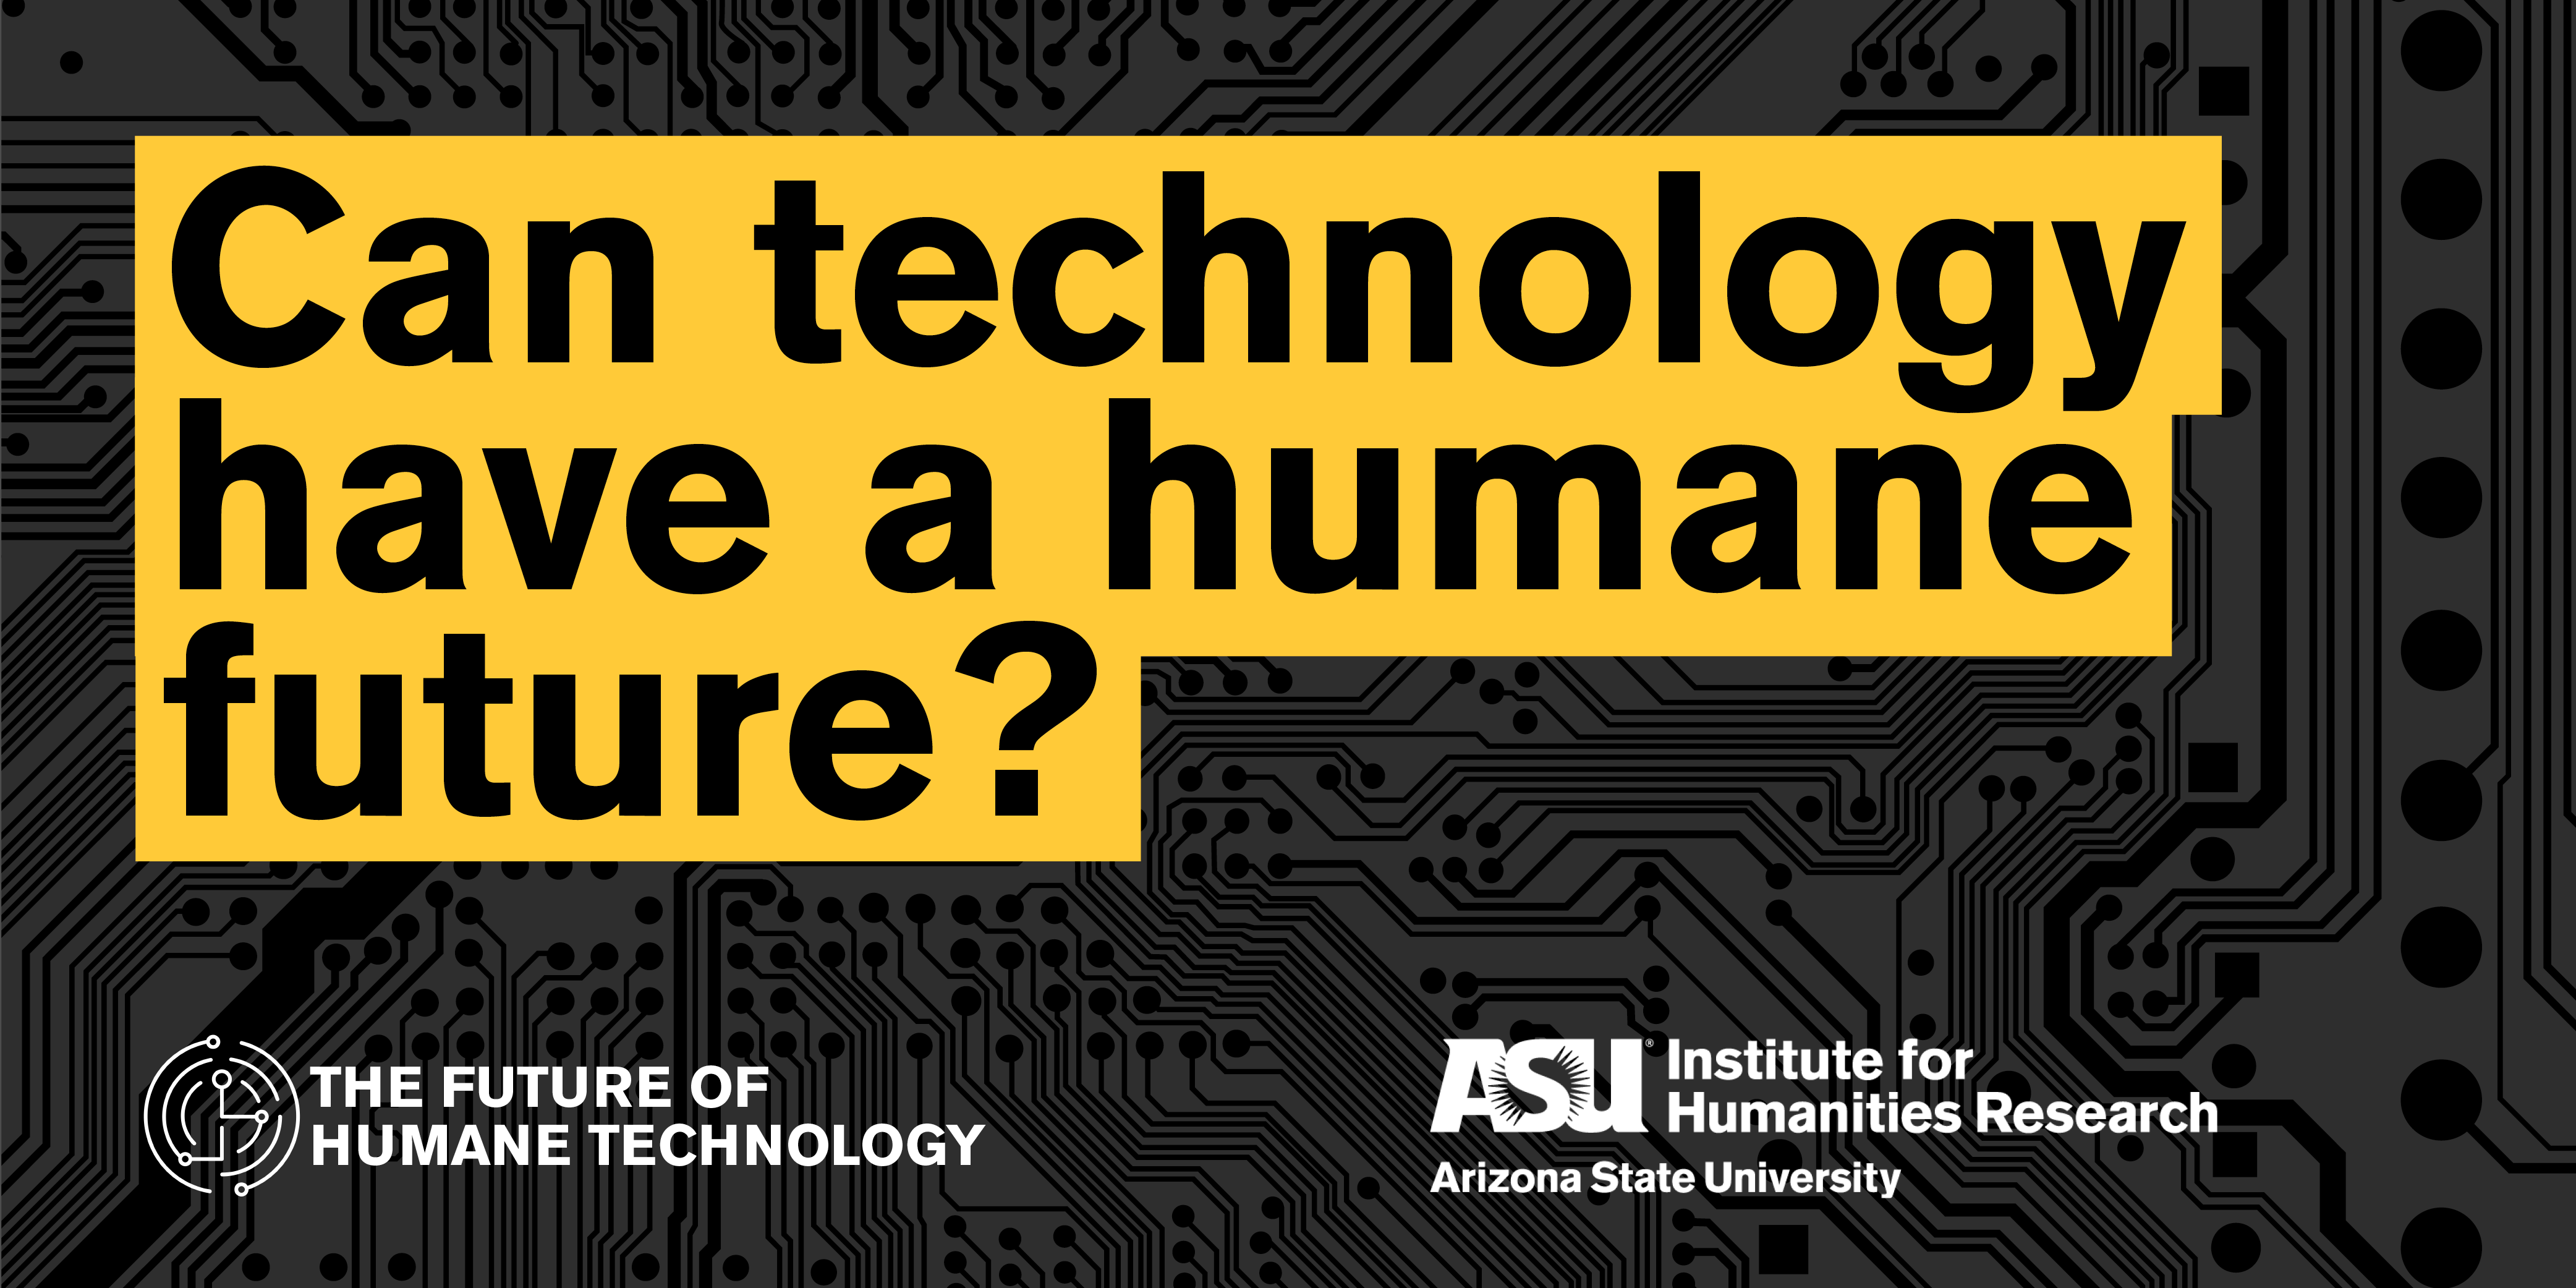 The Future of Humane Technology Symposium